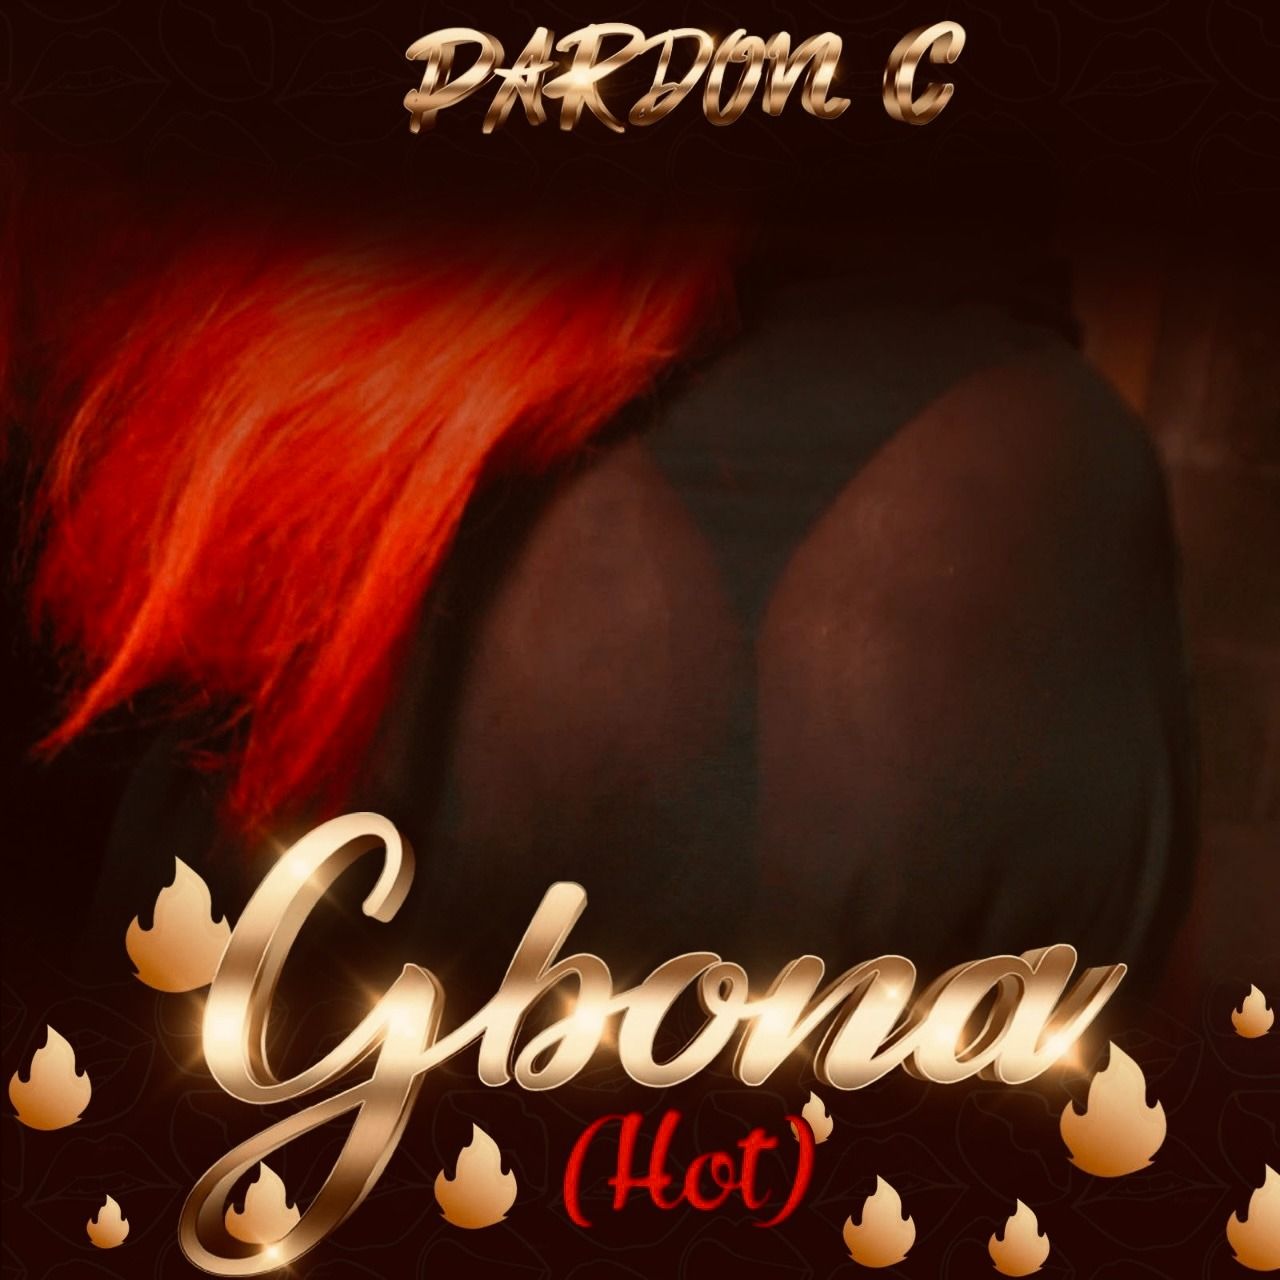 Pardon C - Gbona (Hot)